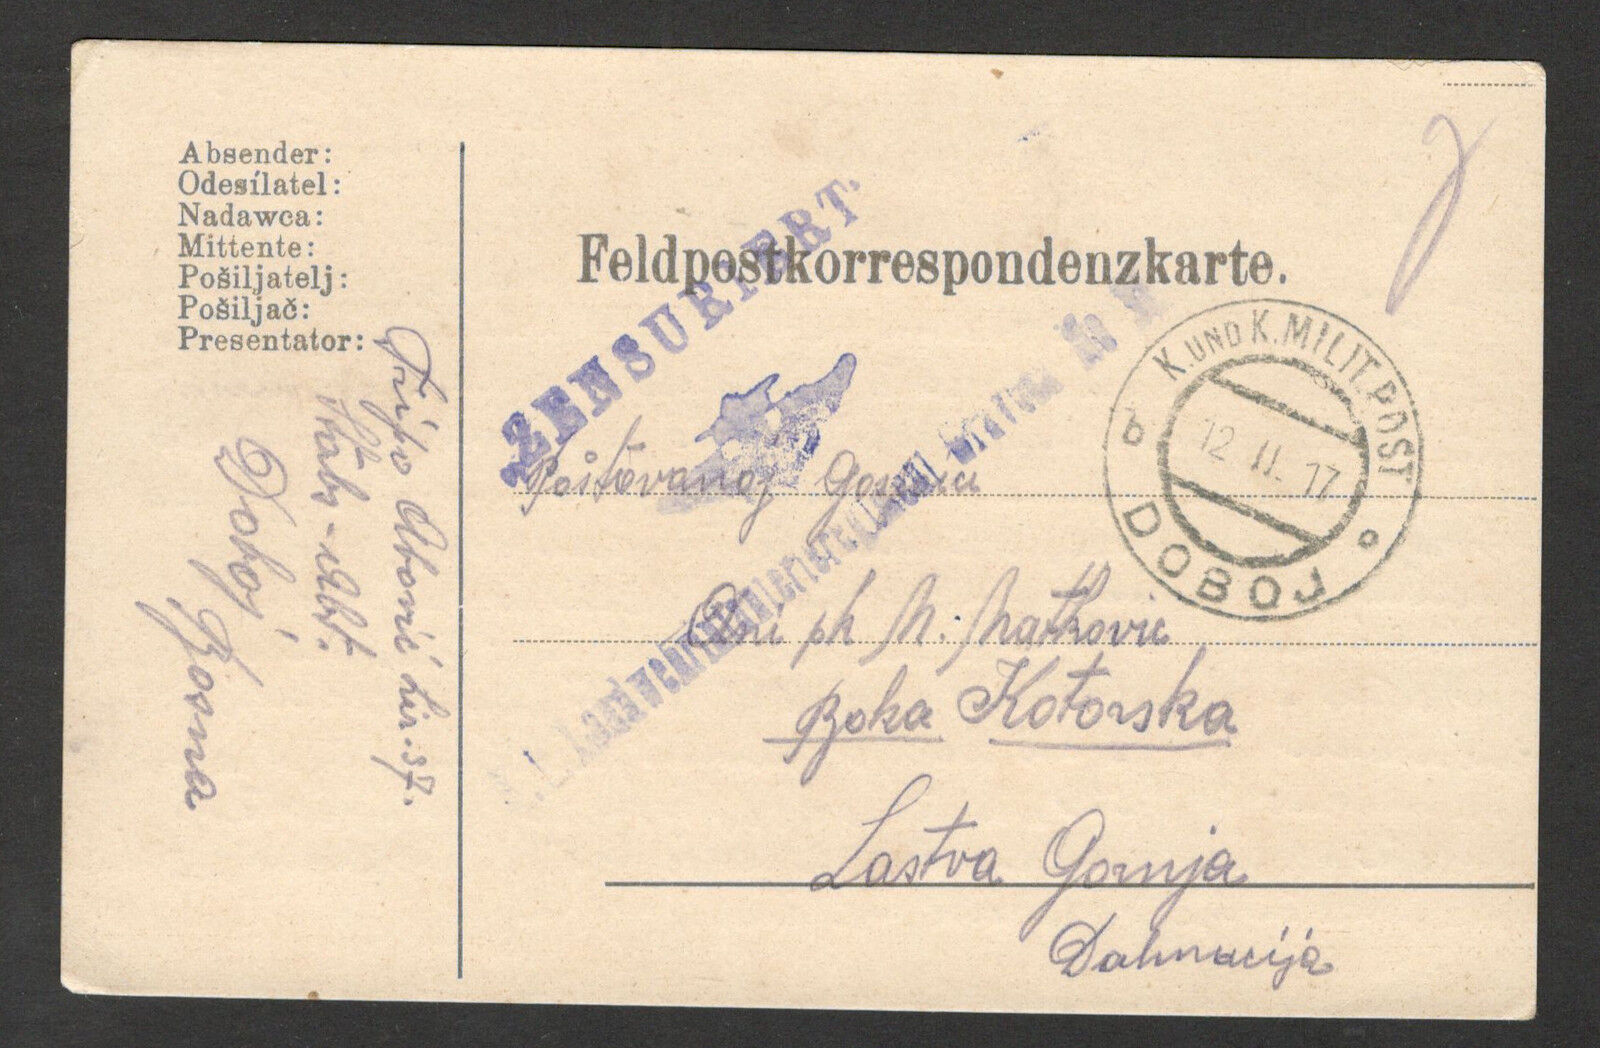 GERMANY-AUSTRIA-HUNGARY-MONTENEGRO-BOSNIA-FELDPOST CENSORED POSTCARD-1917.